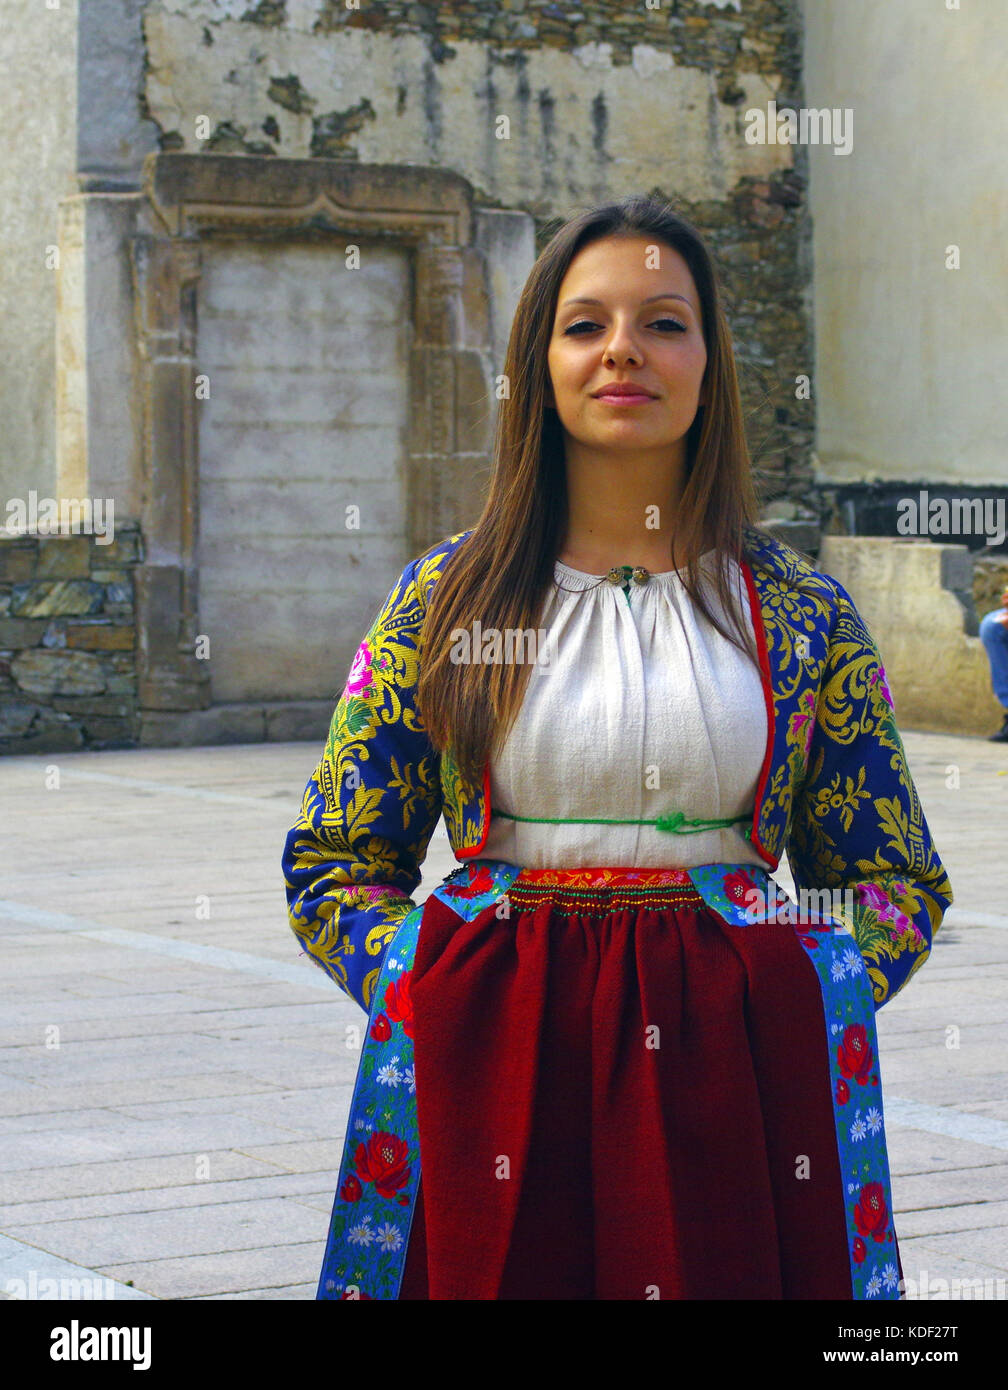 Meana Sardo, Nuoro, Sardegna.giovane donna con tipica sarda a usura Foto  stock - Alamy